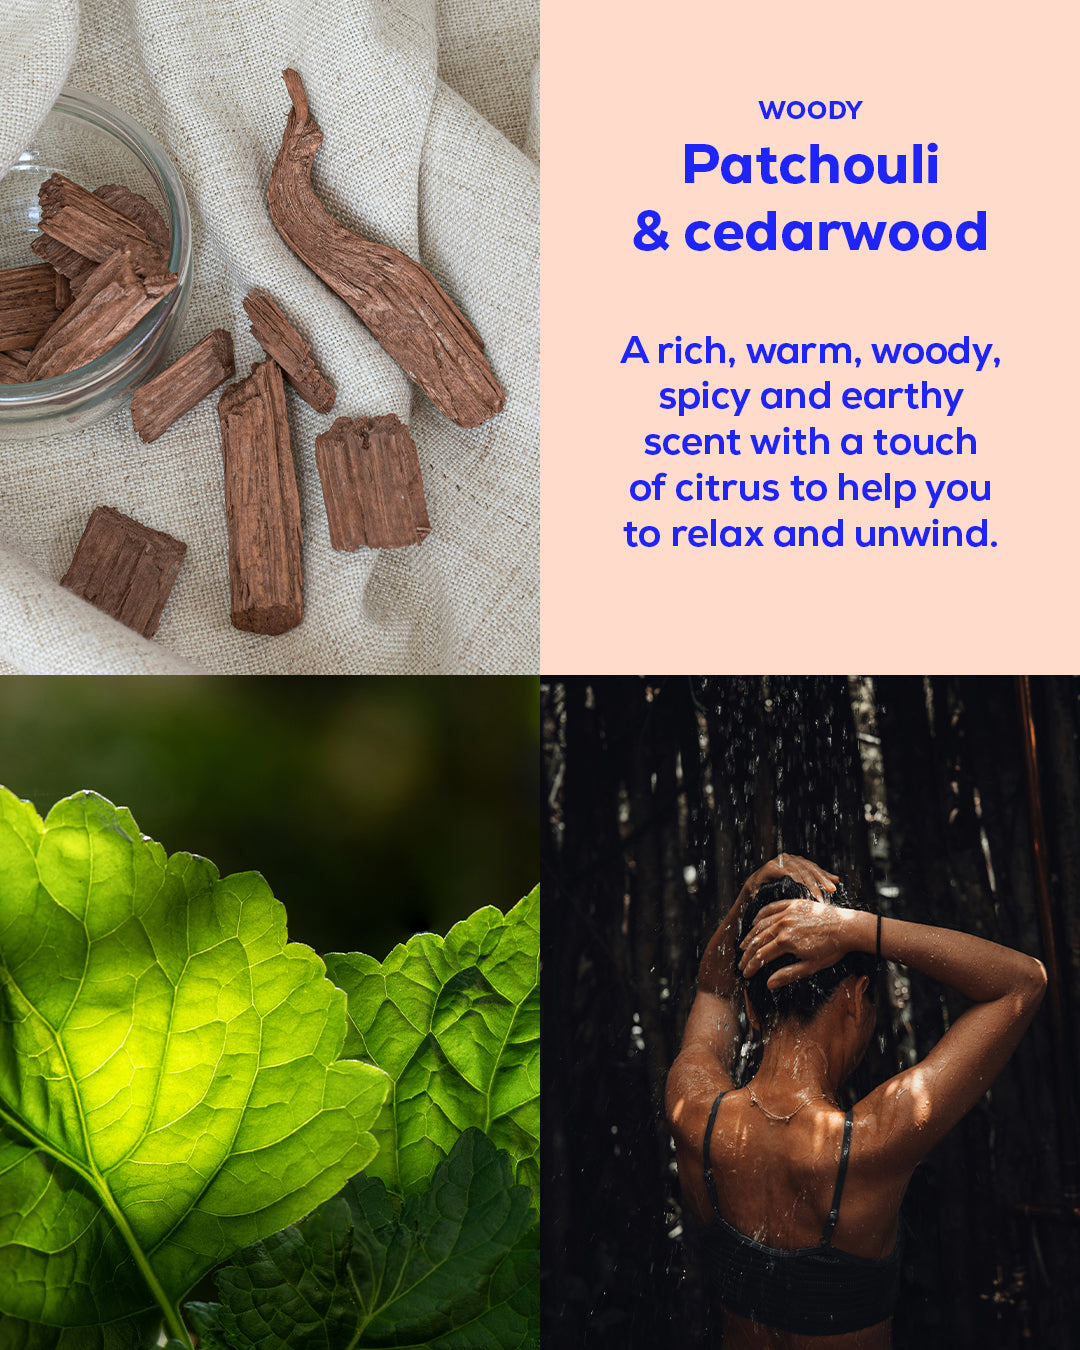 Patchouli and cedarwood